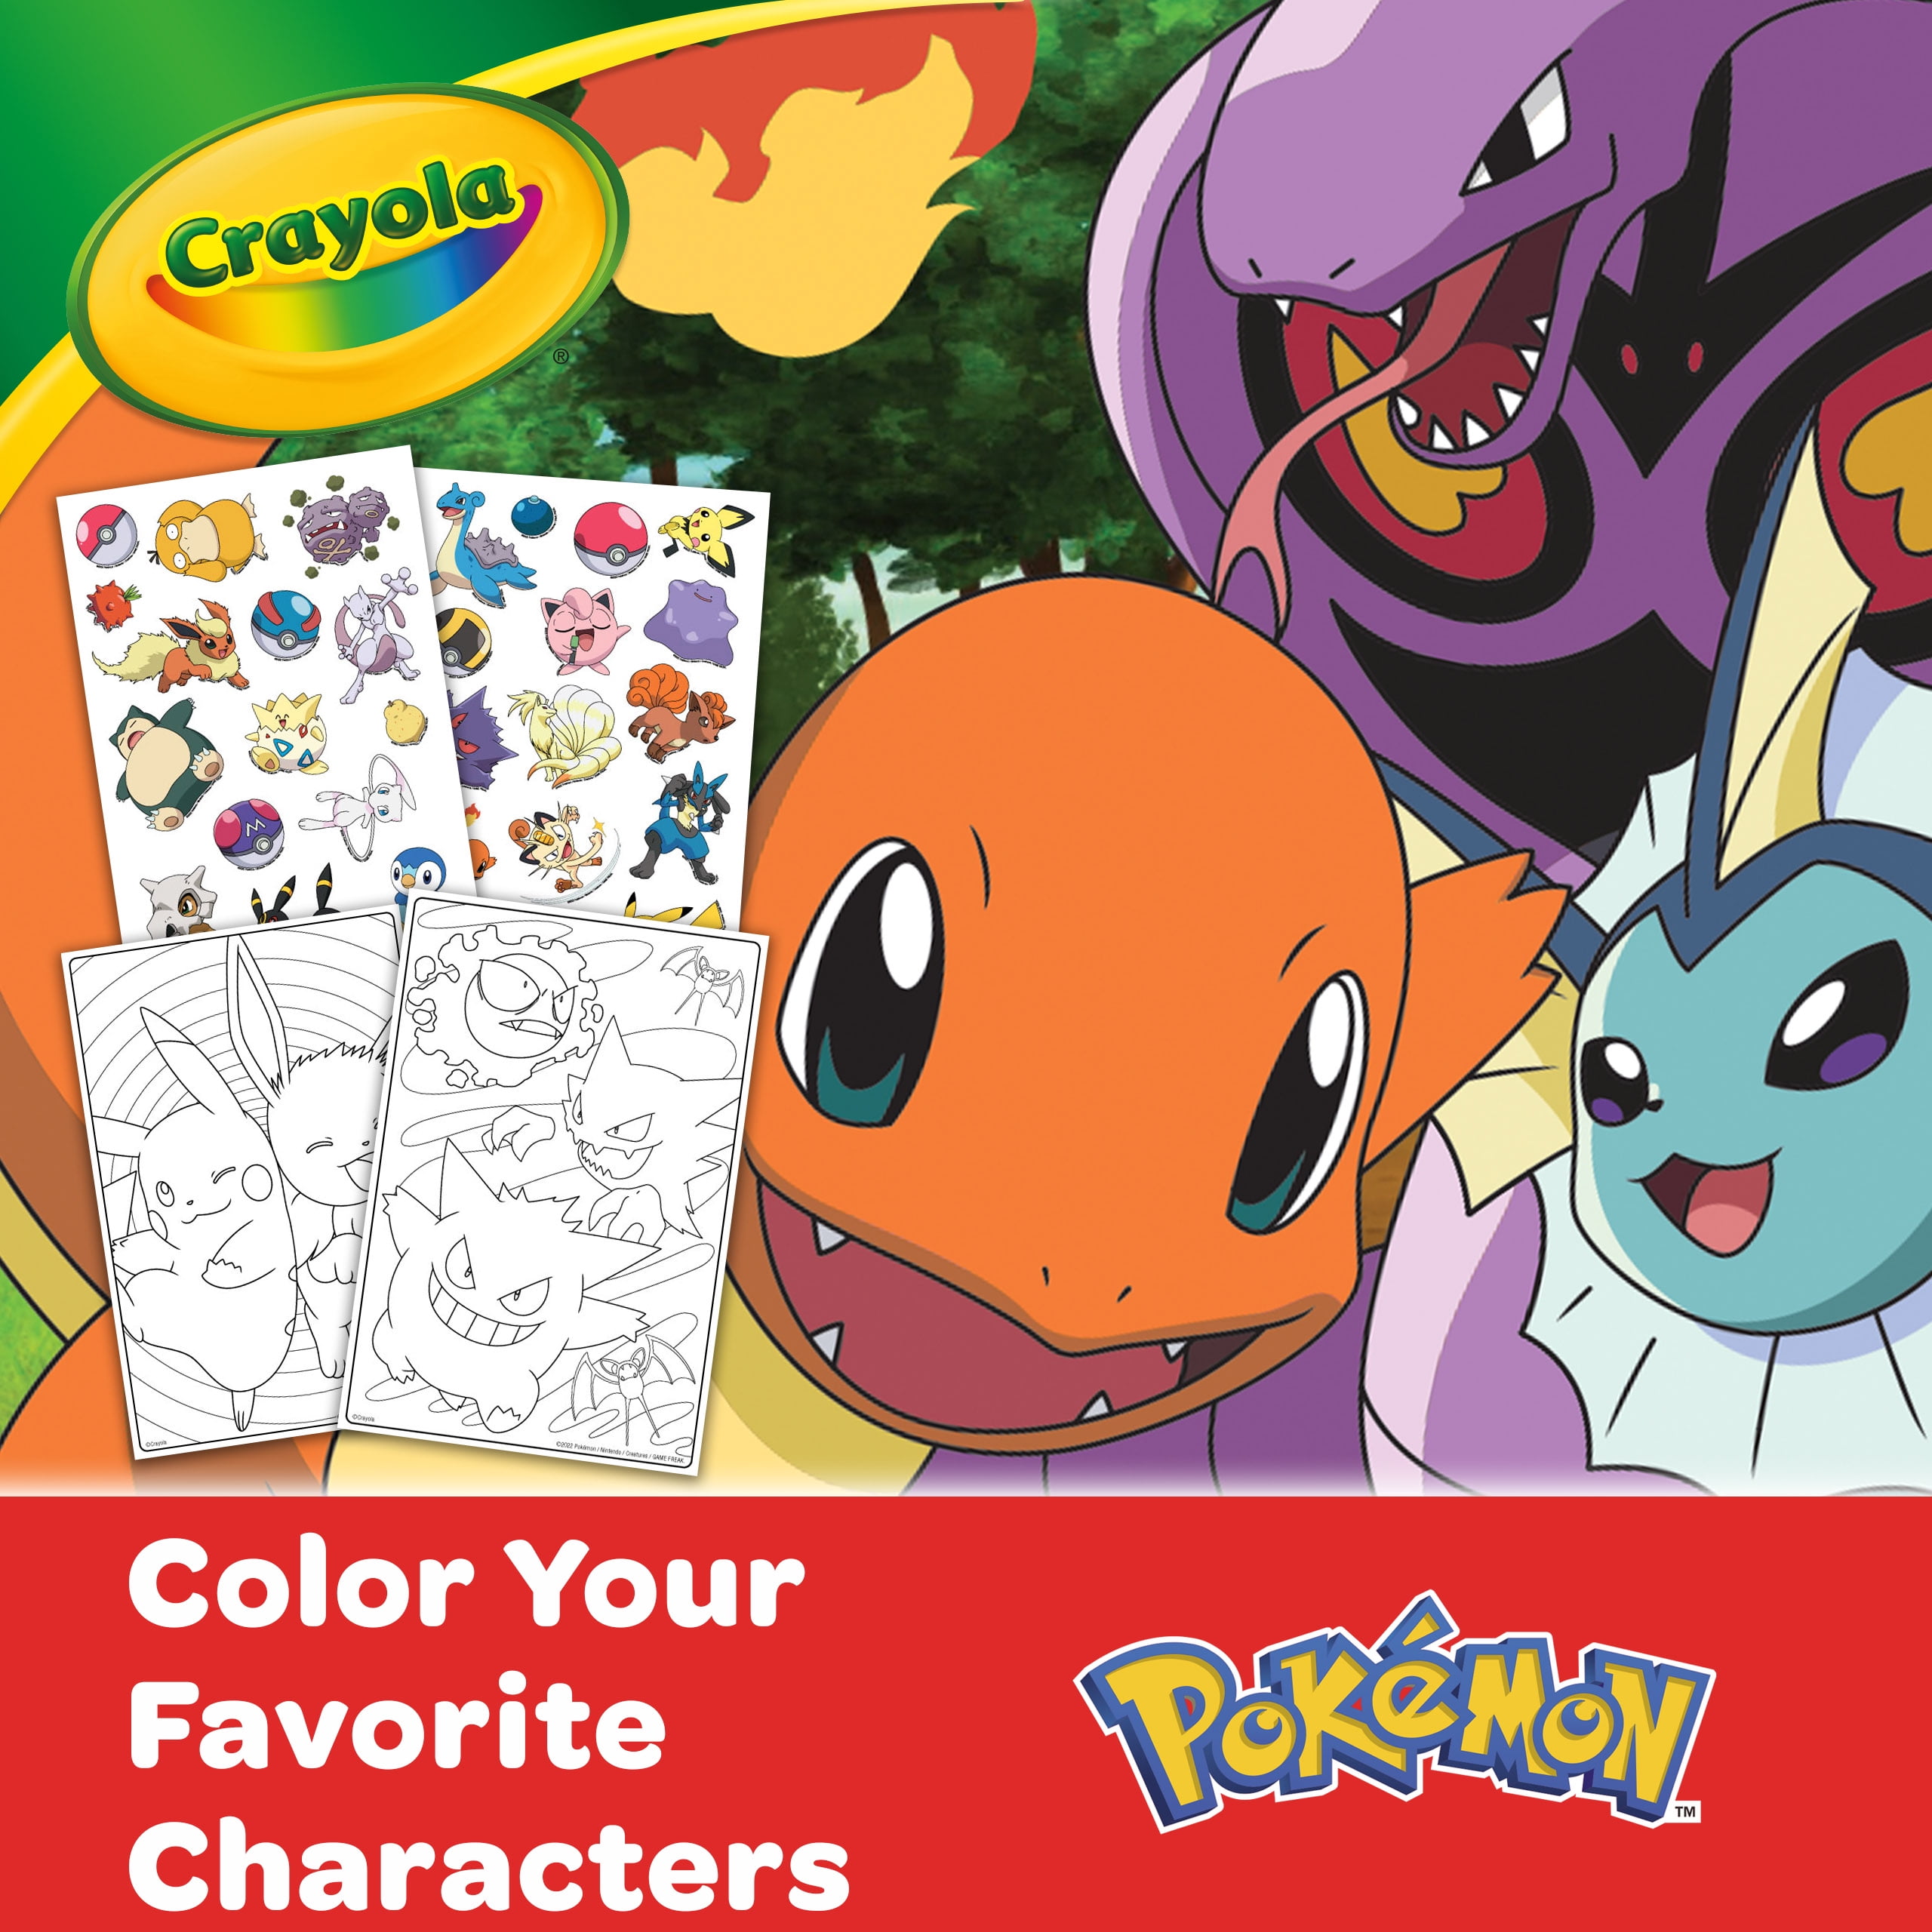 1st Generation Starter Pokemon (Twistable VS Normal Crayola Crayon Debate)  - Suggestion Video! 